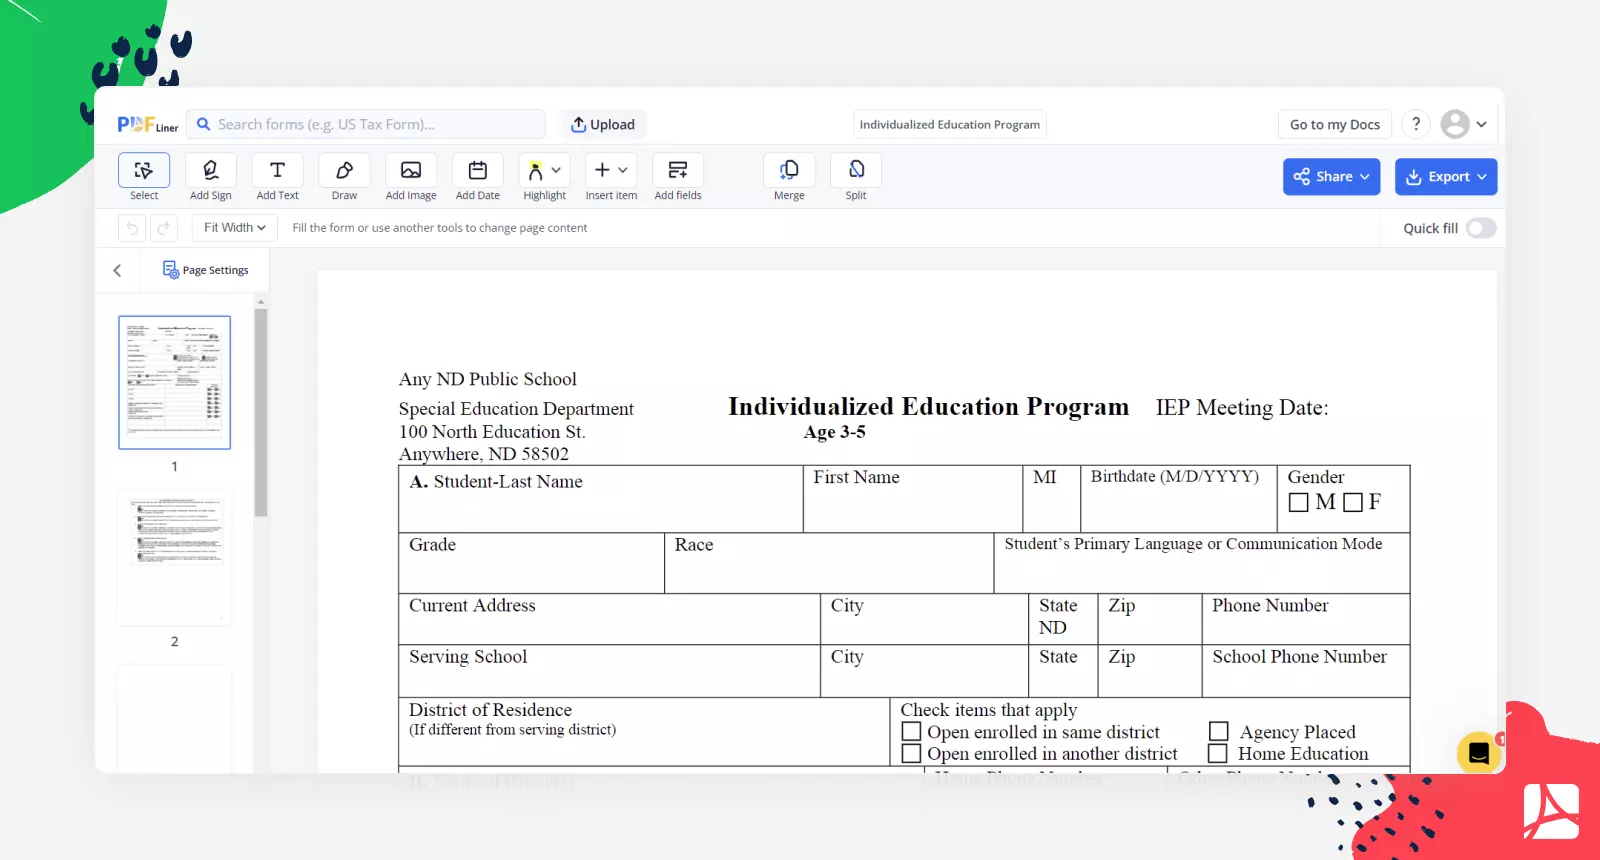 Individualized Education Program form screenshot